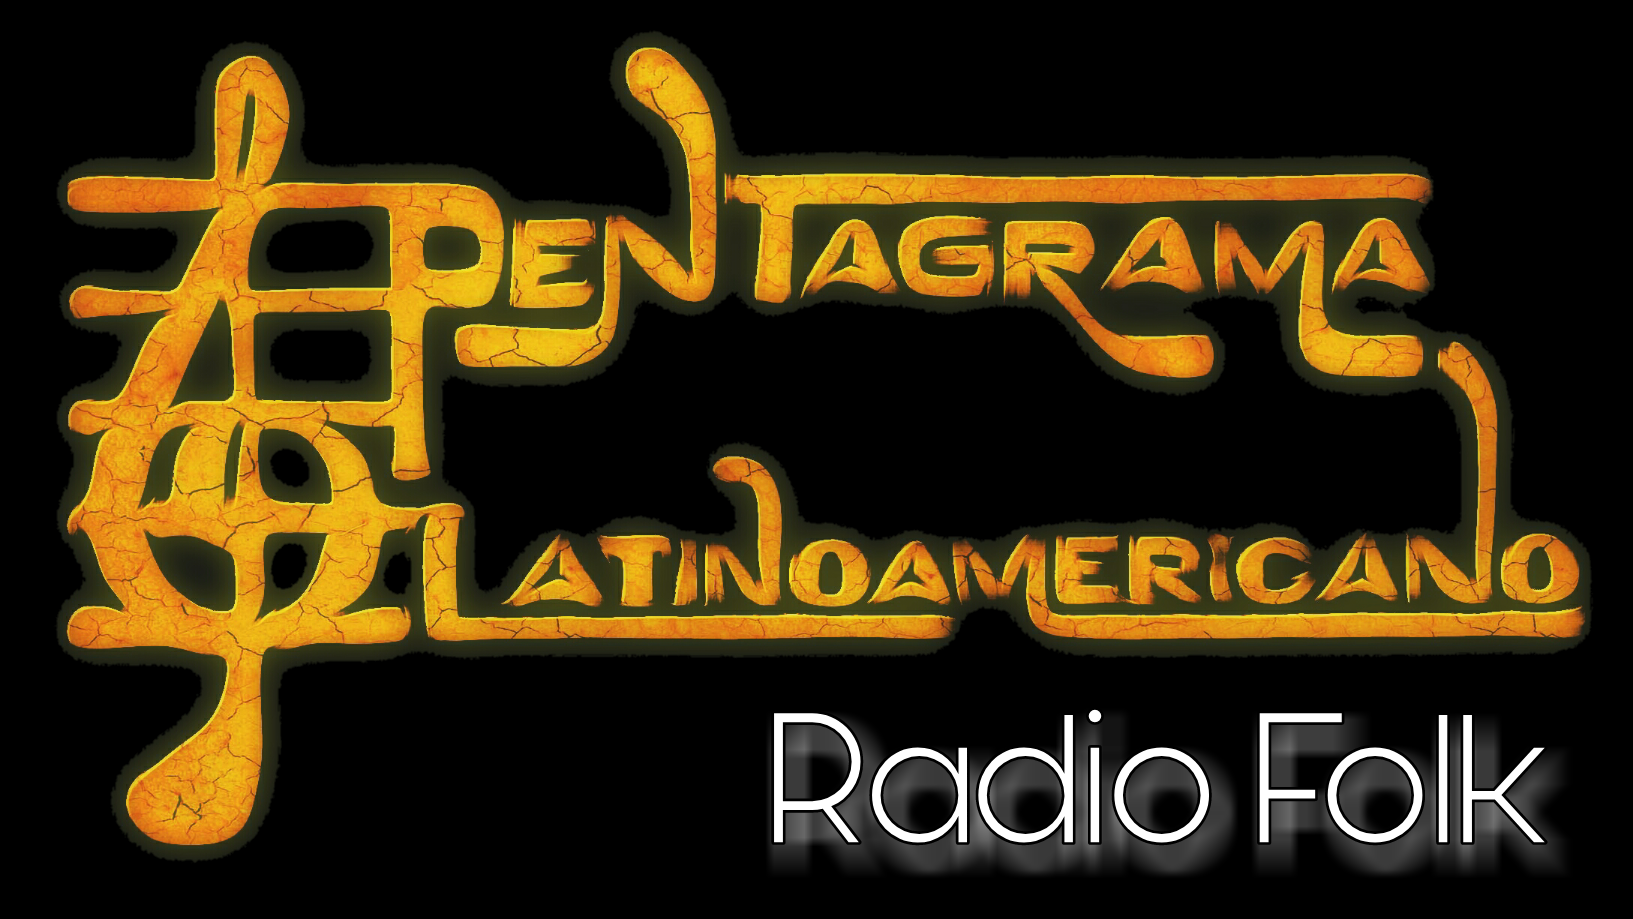 PENTAGRAMA LATINOAMERICANO Radio Folk